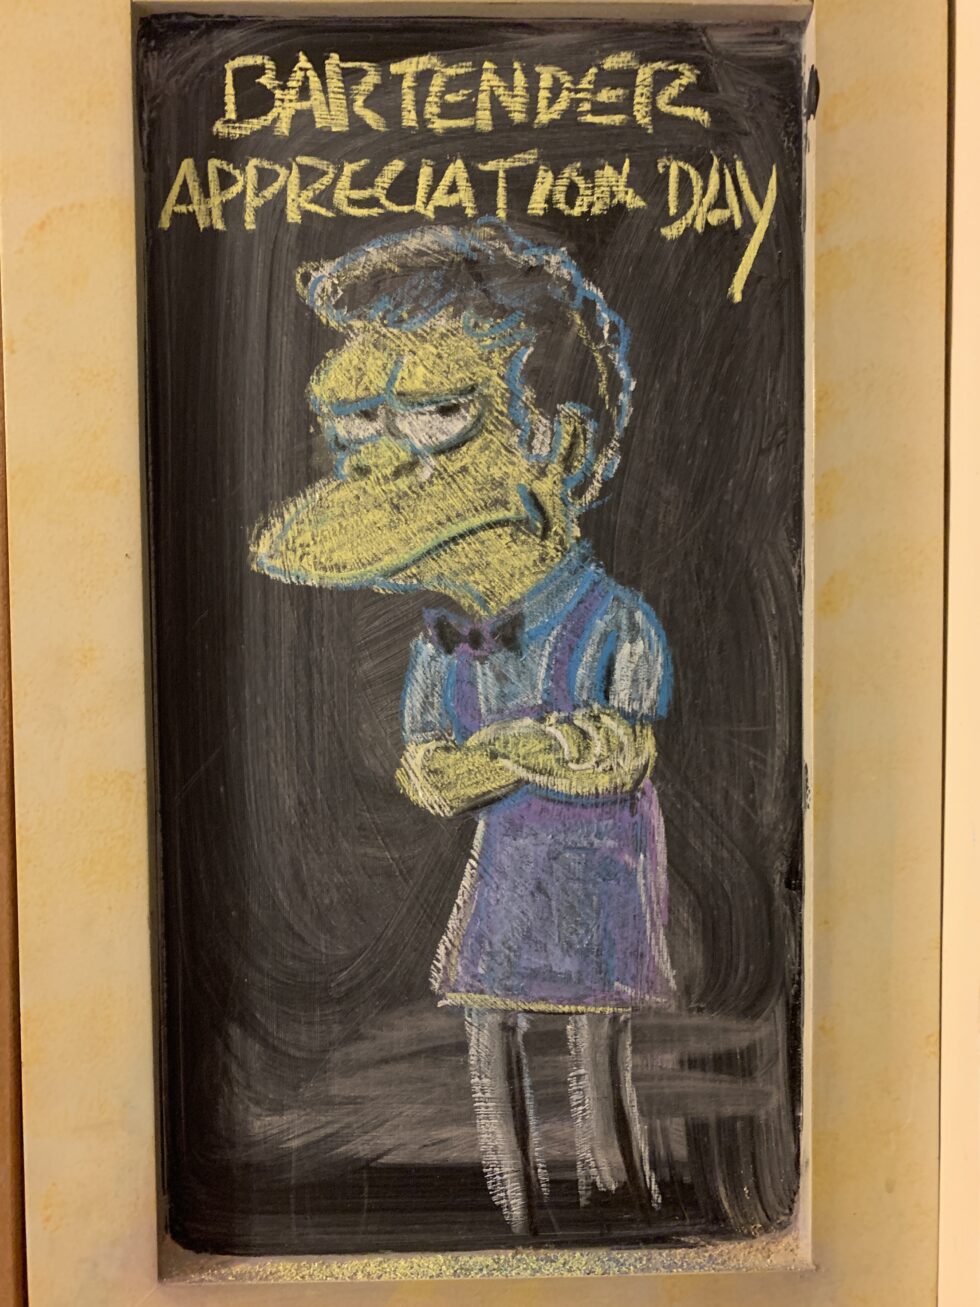 bartender appreciation day